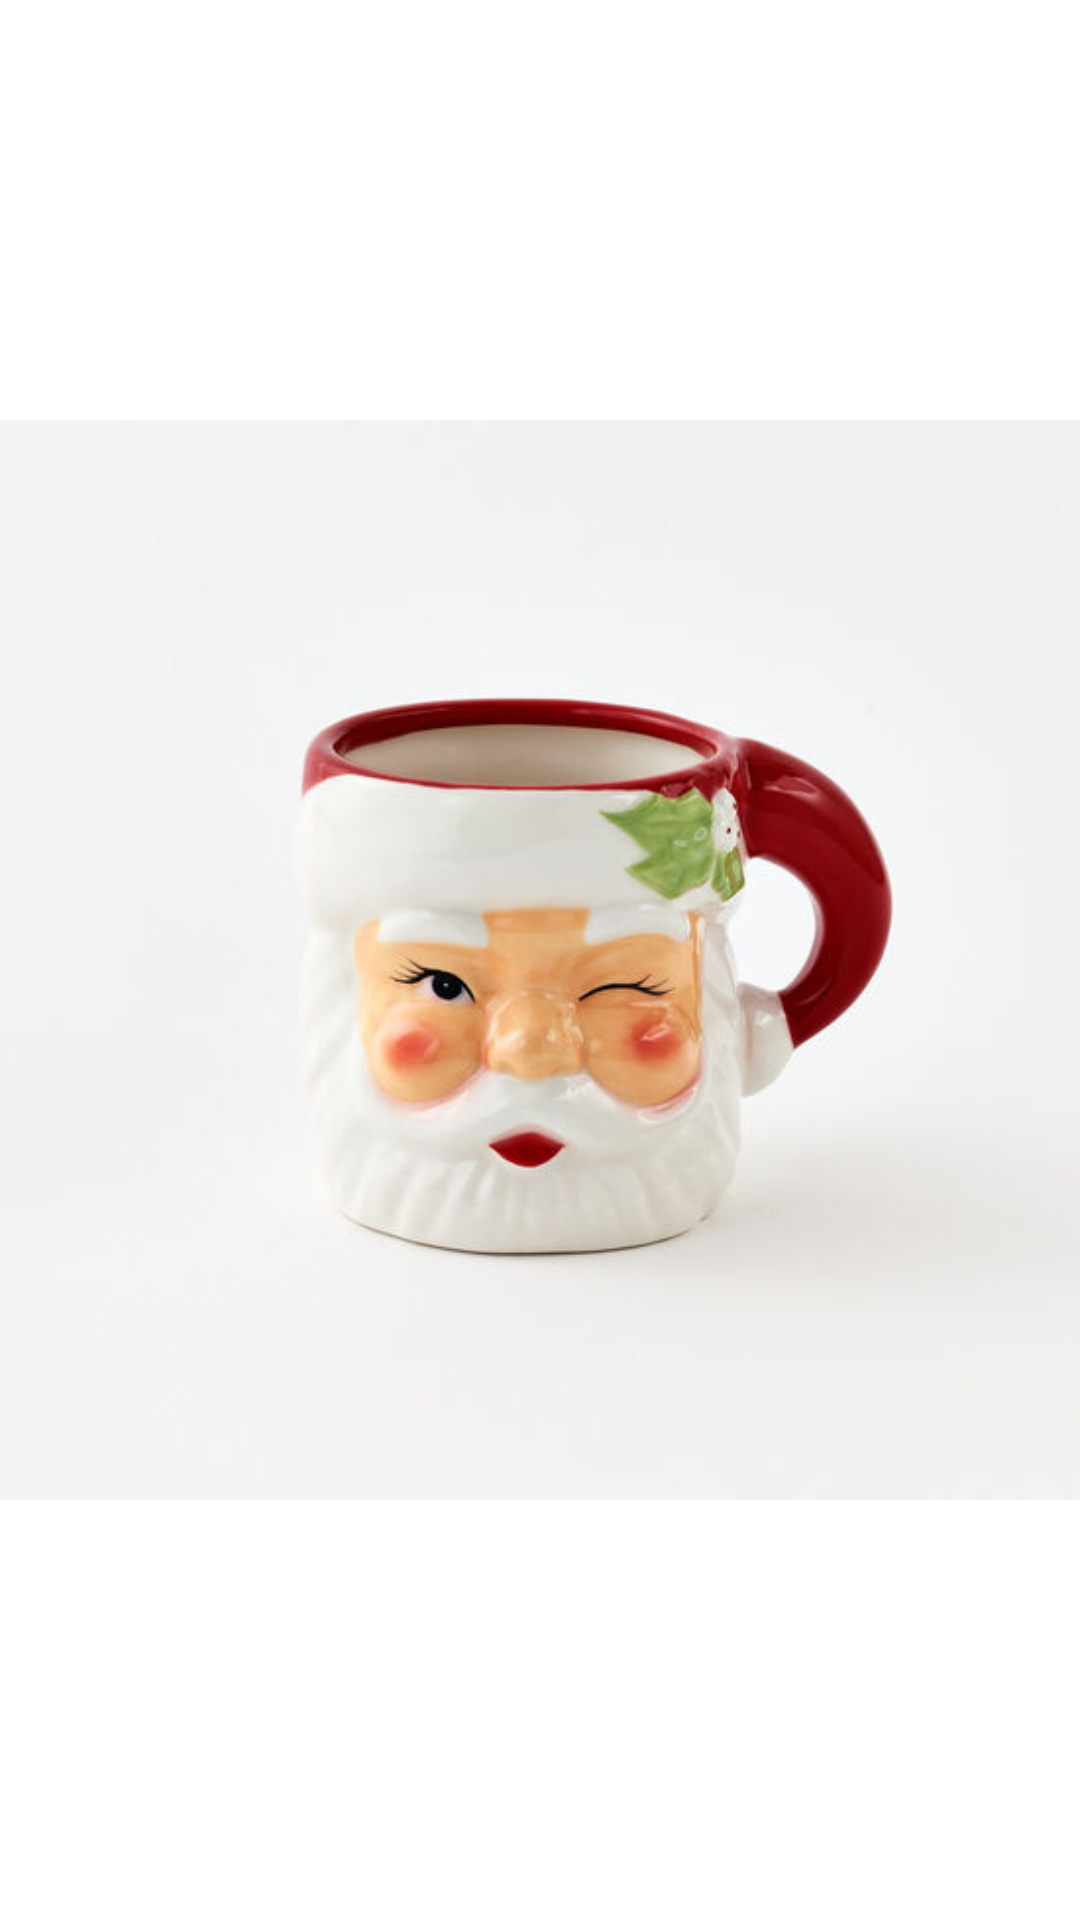 Winking Santa Mug